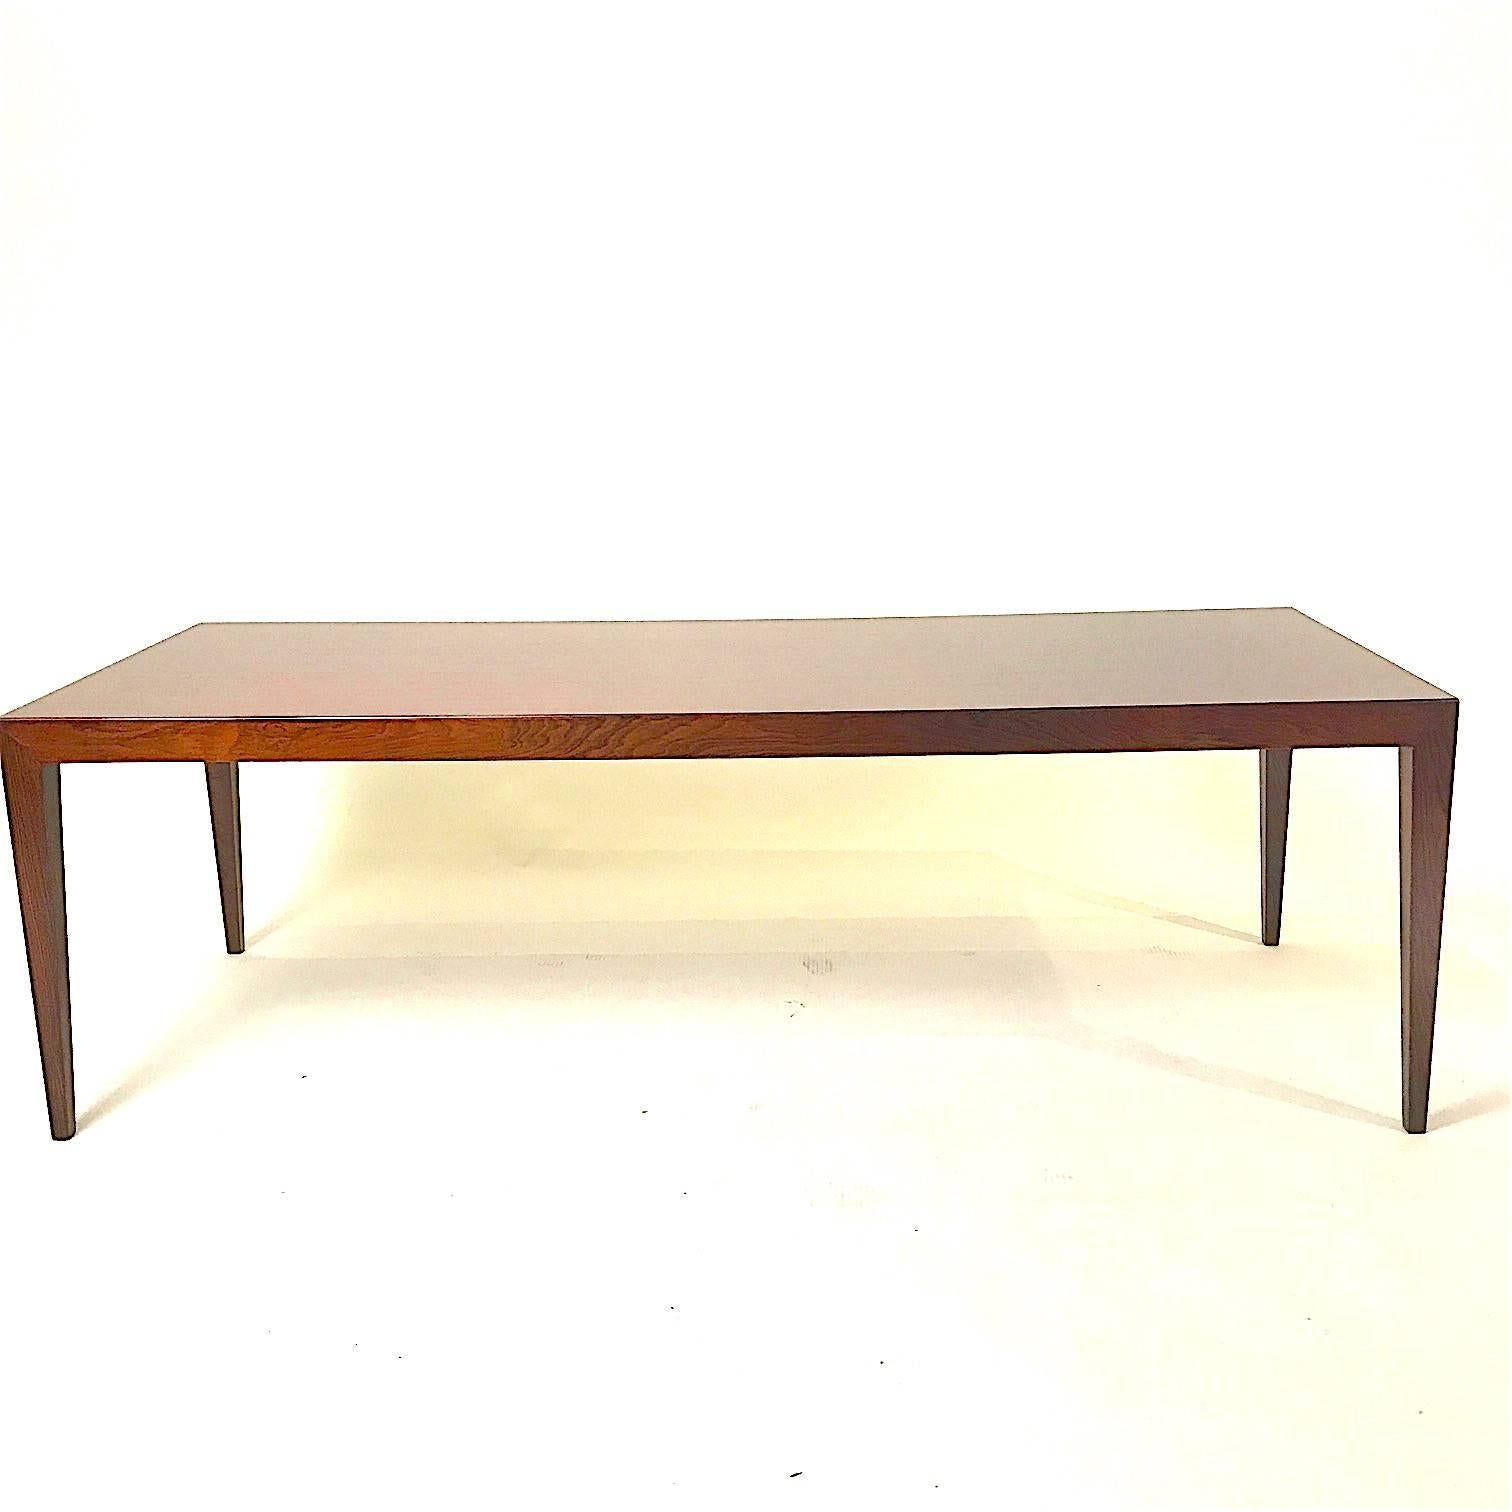 Elegant, classical coffee table by Danish designer Severin Hansen Mid-Century Modern in rosewood.